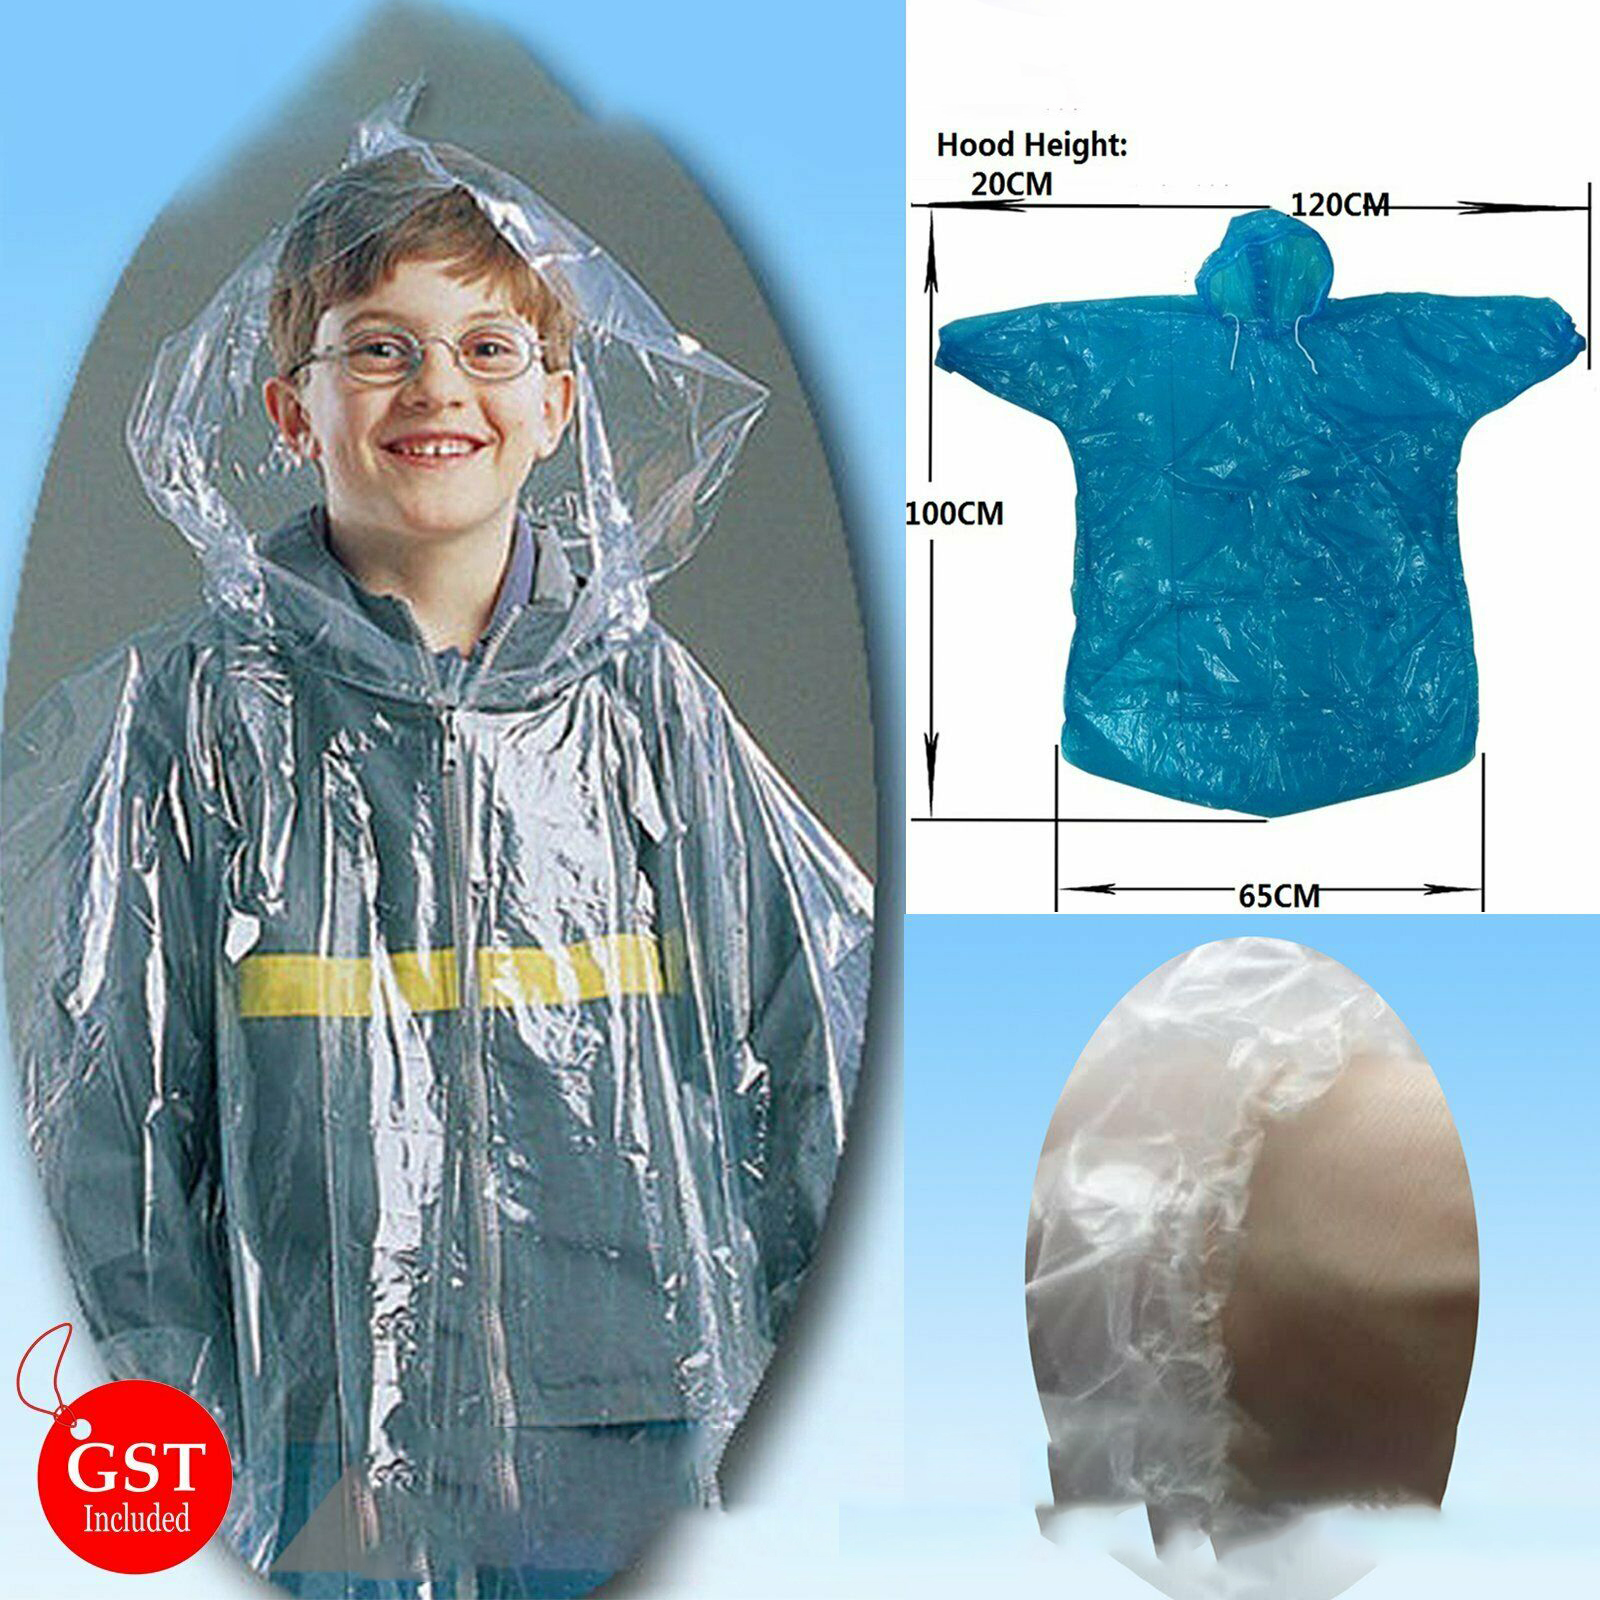 Details about   4x Raincoats Disposable Kids Emergency Rain Coat Poncho Hiking Camping Coat